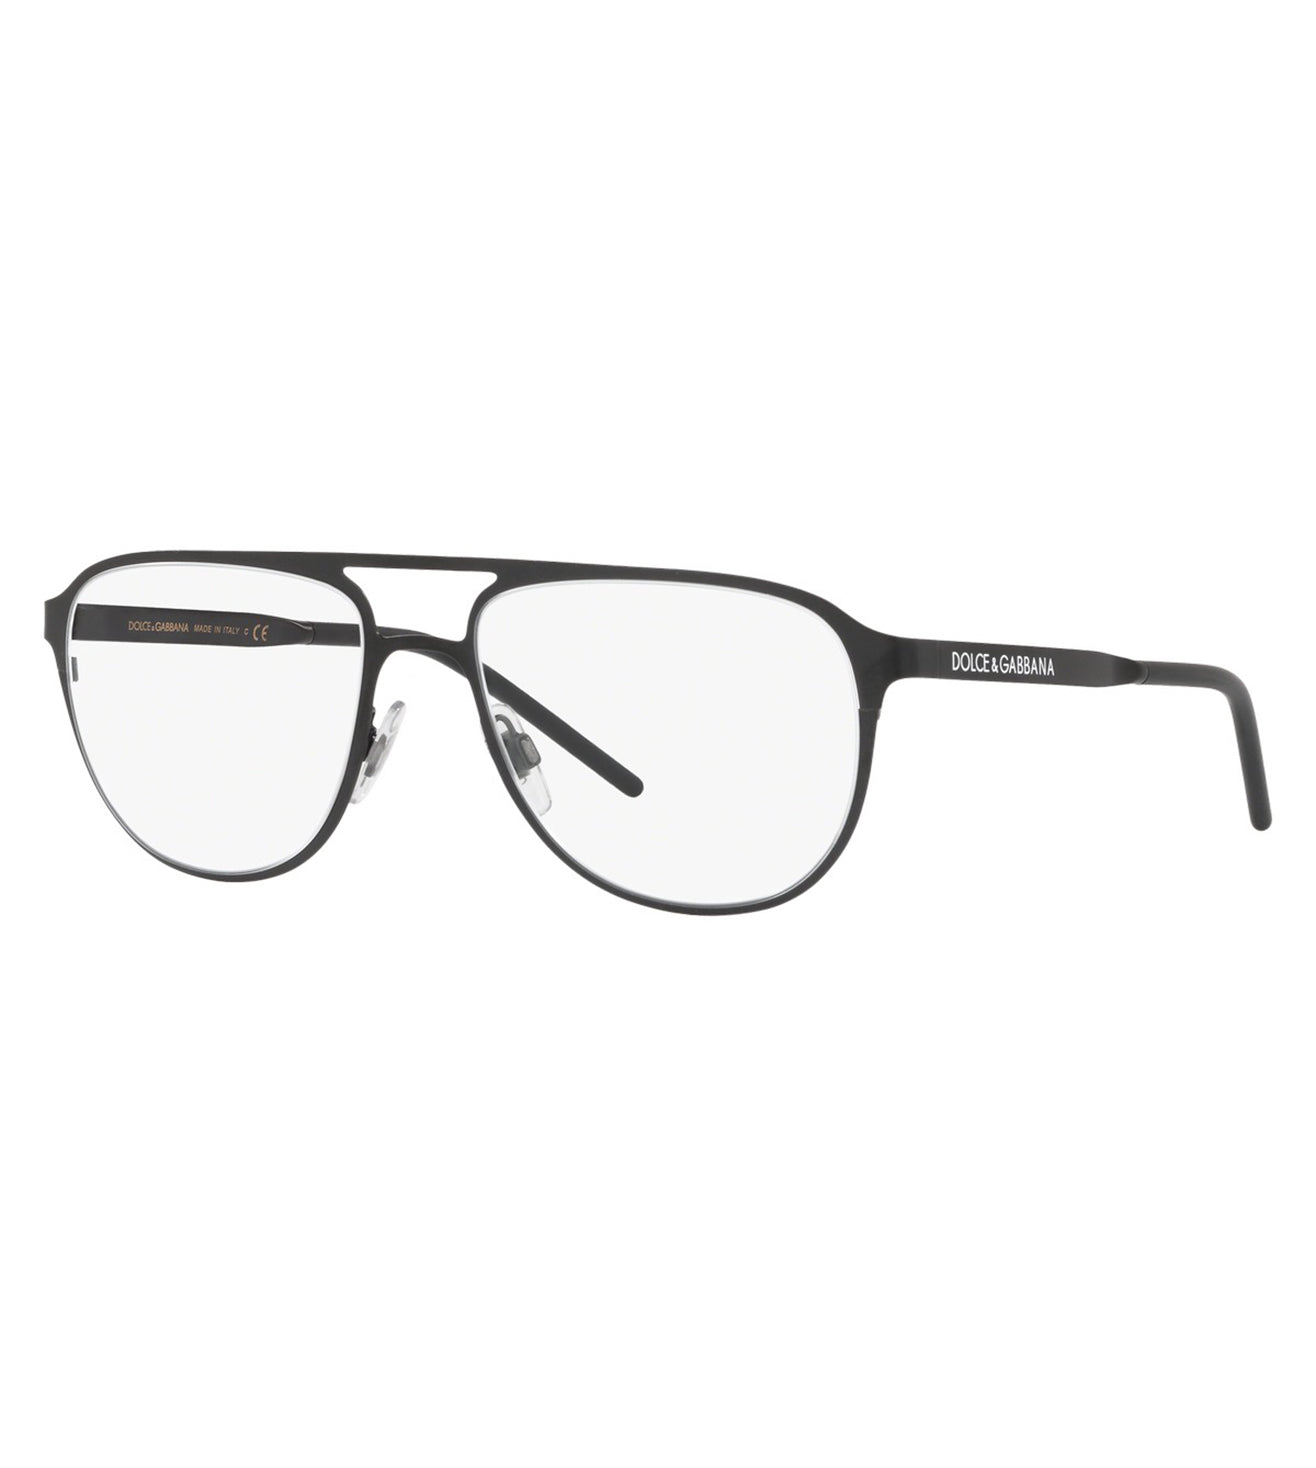 Black Aviator Eyeglasses